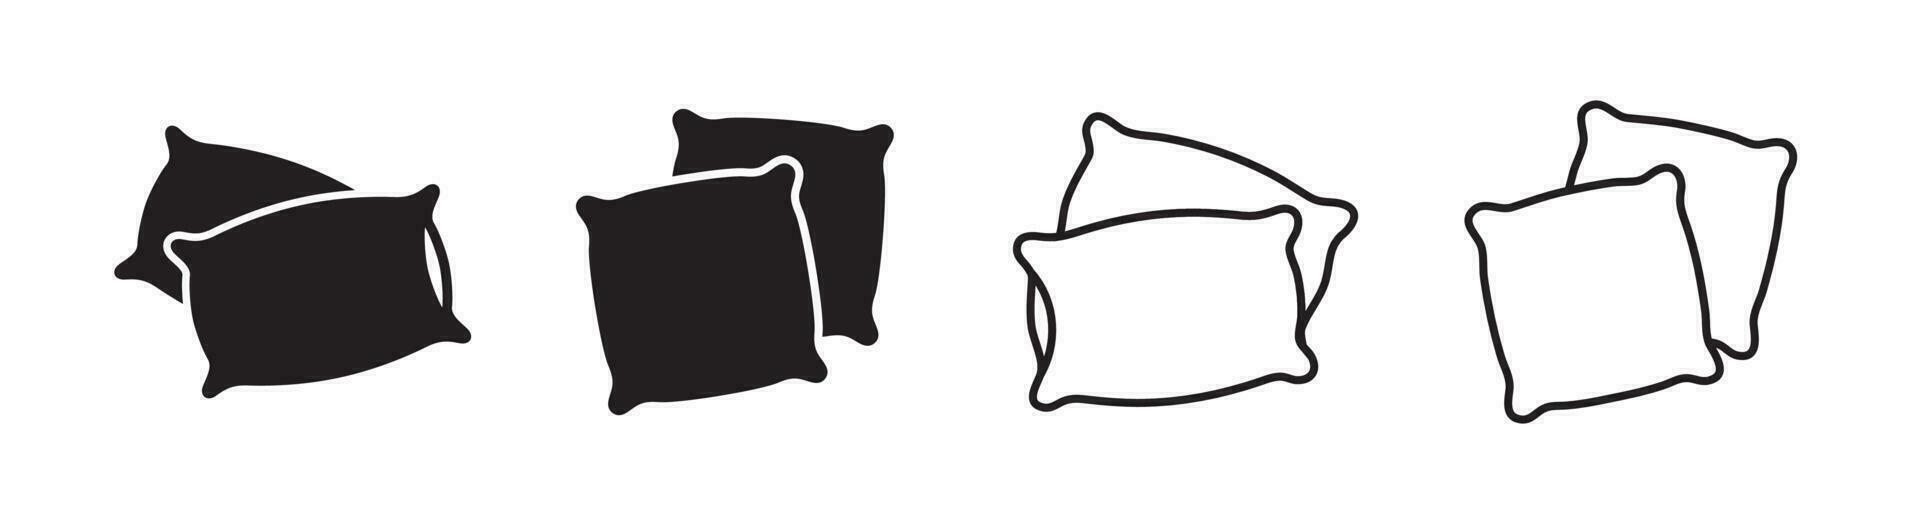 Pillow icon set of 4, design element suitable for websites, print design or app vector